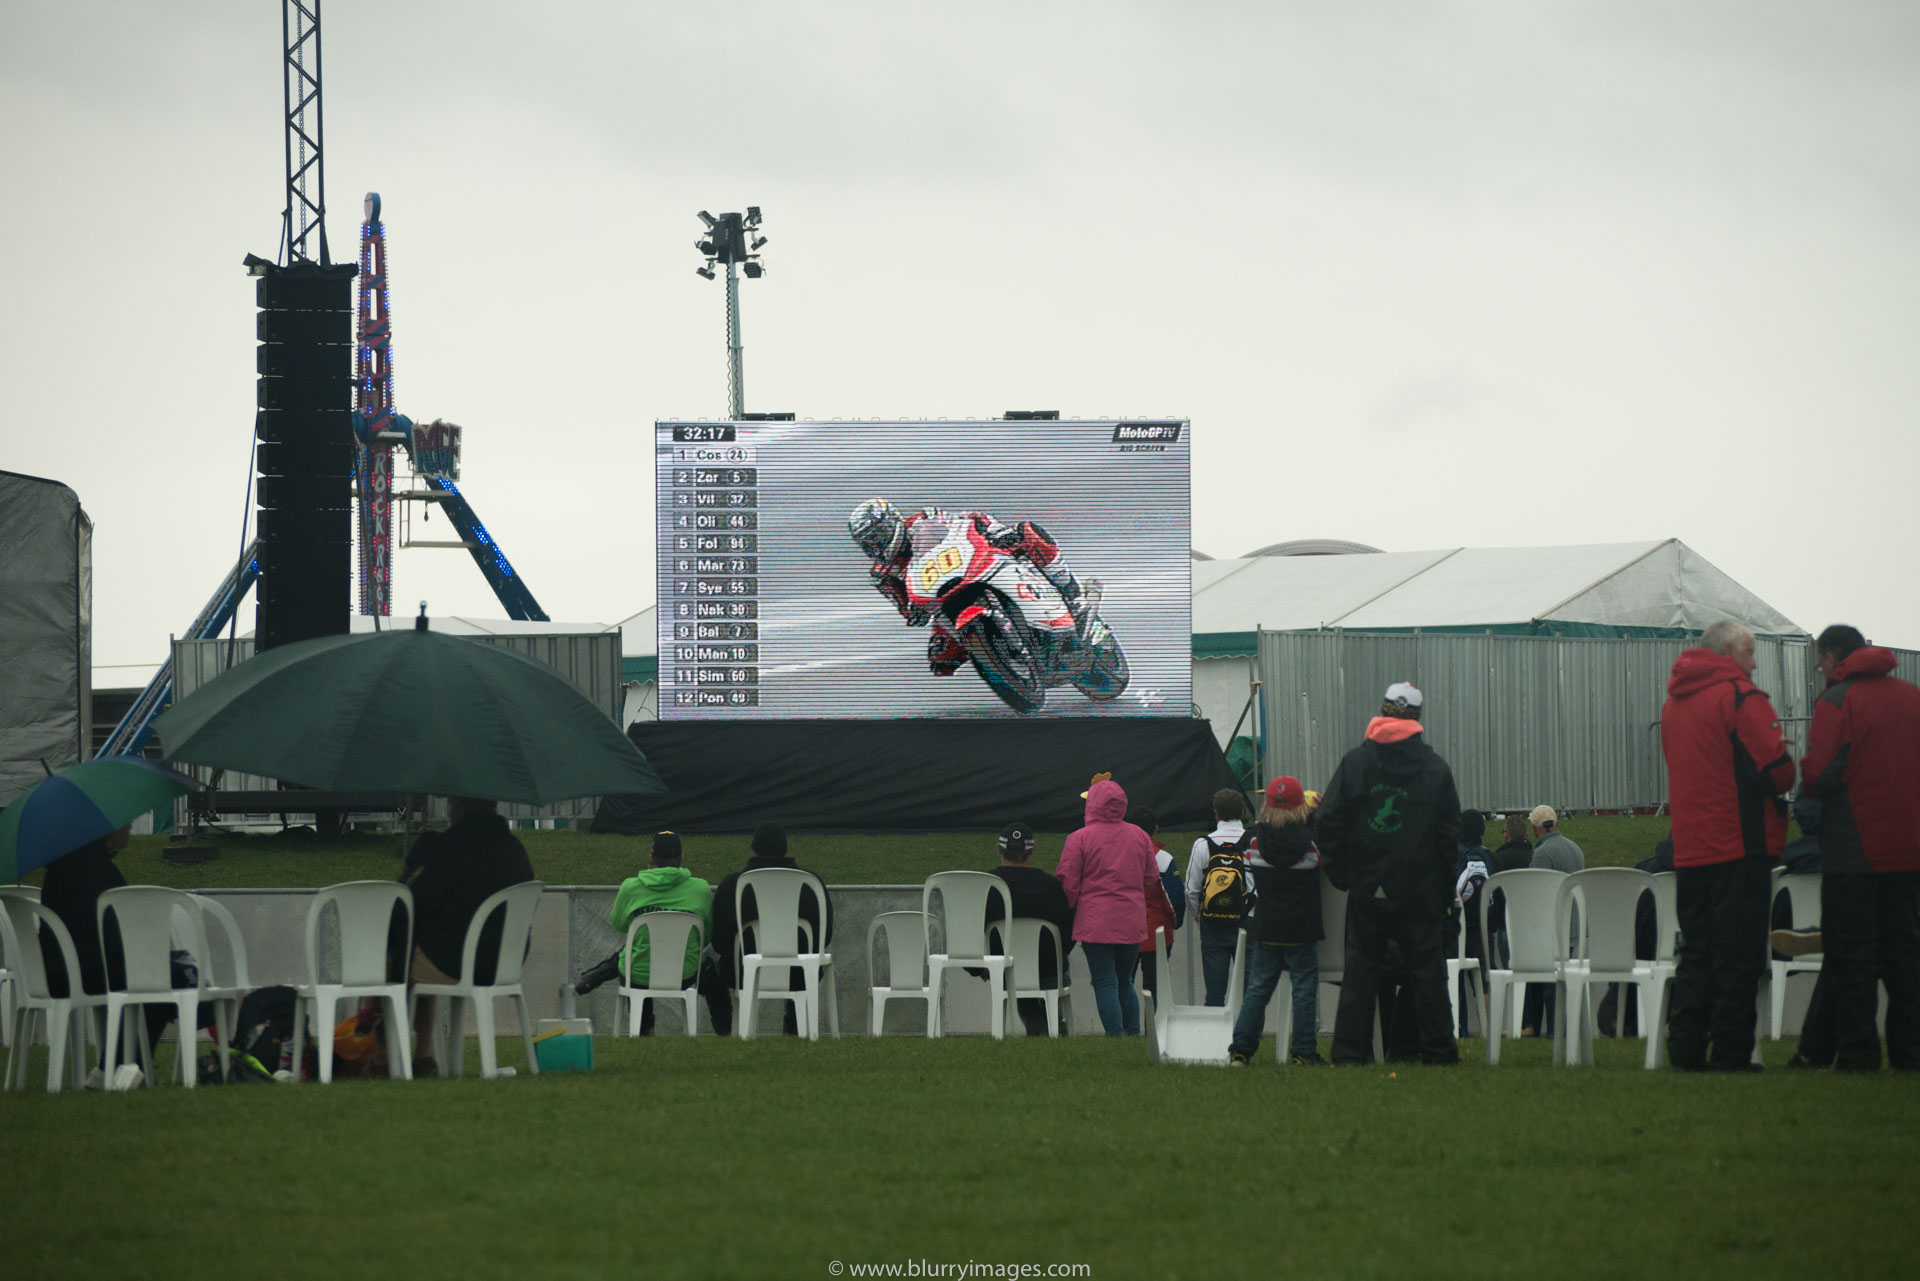 MotoGP Silverstone, watching race, big screen